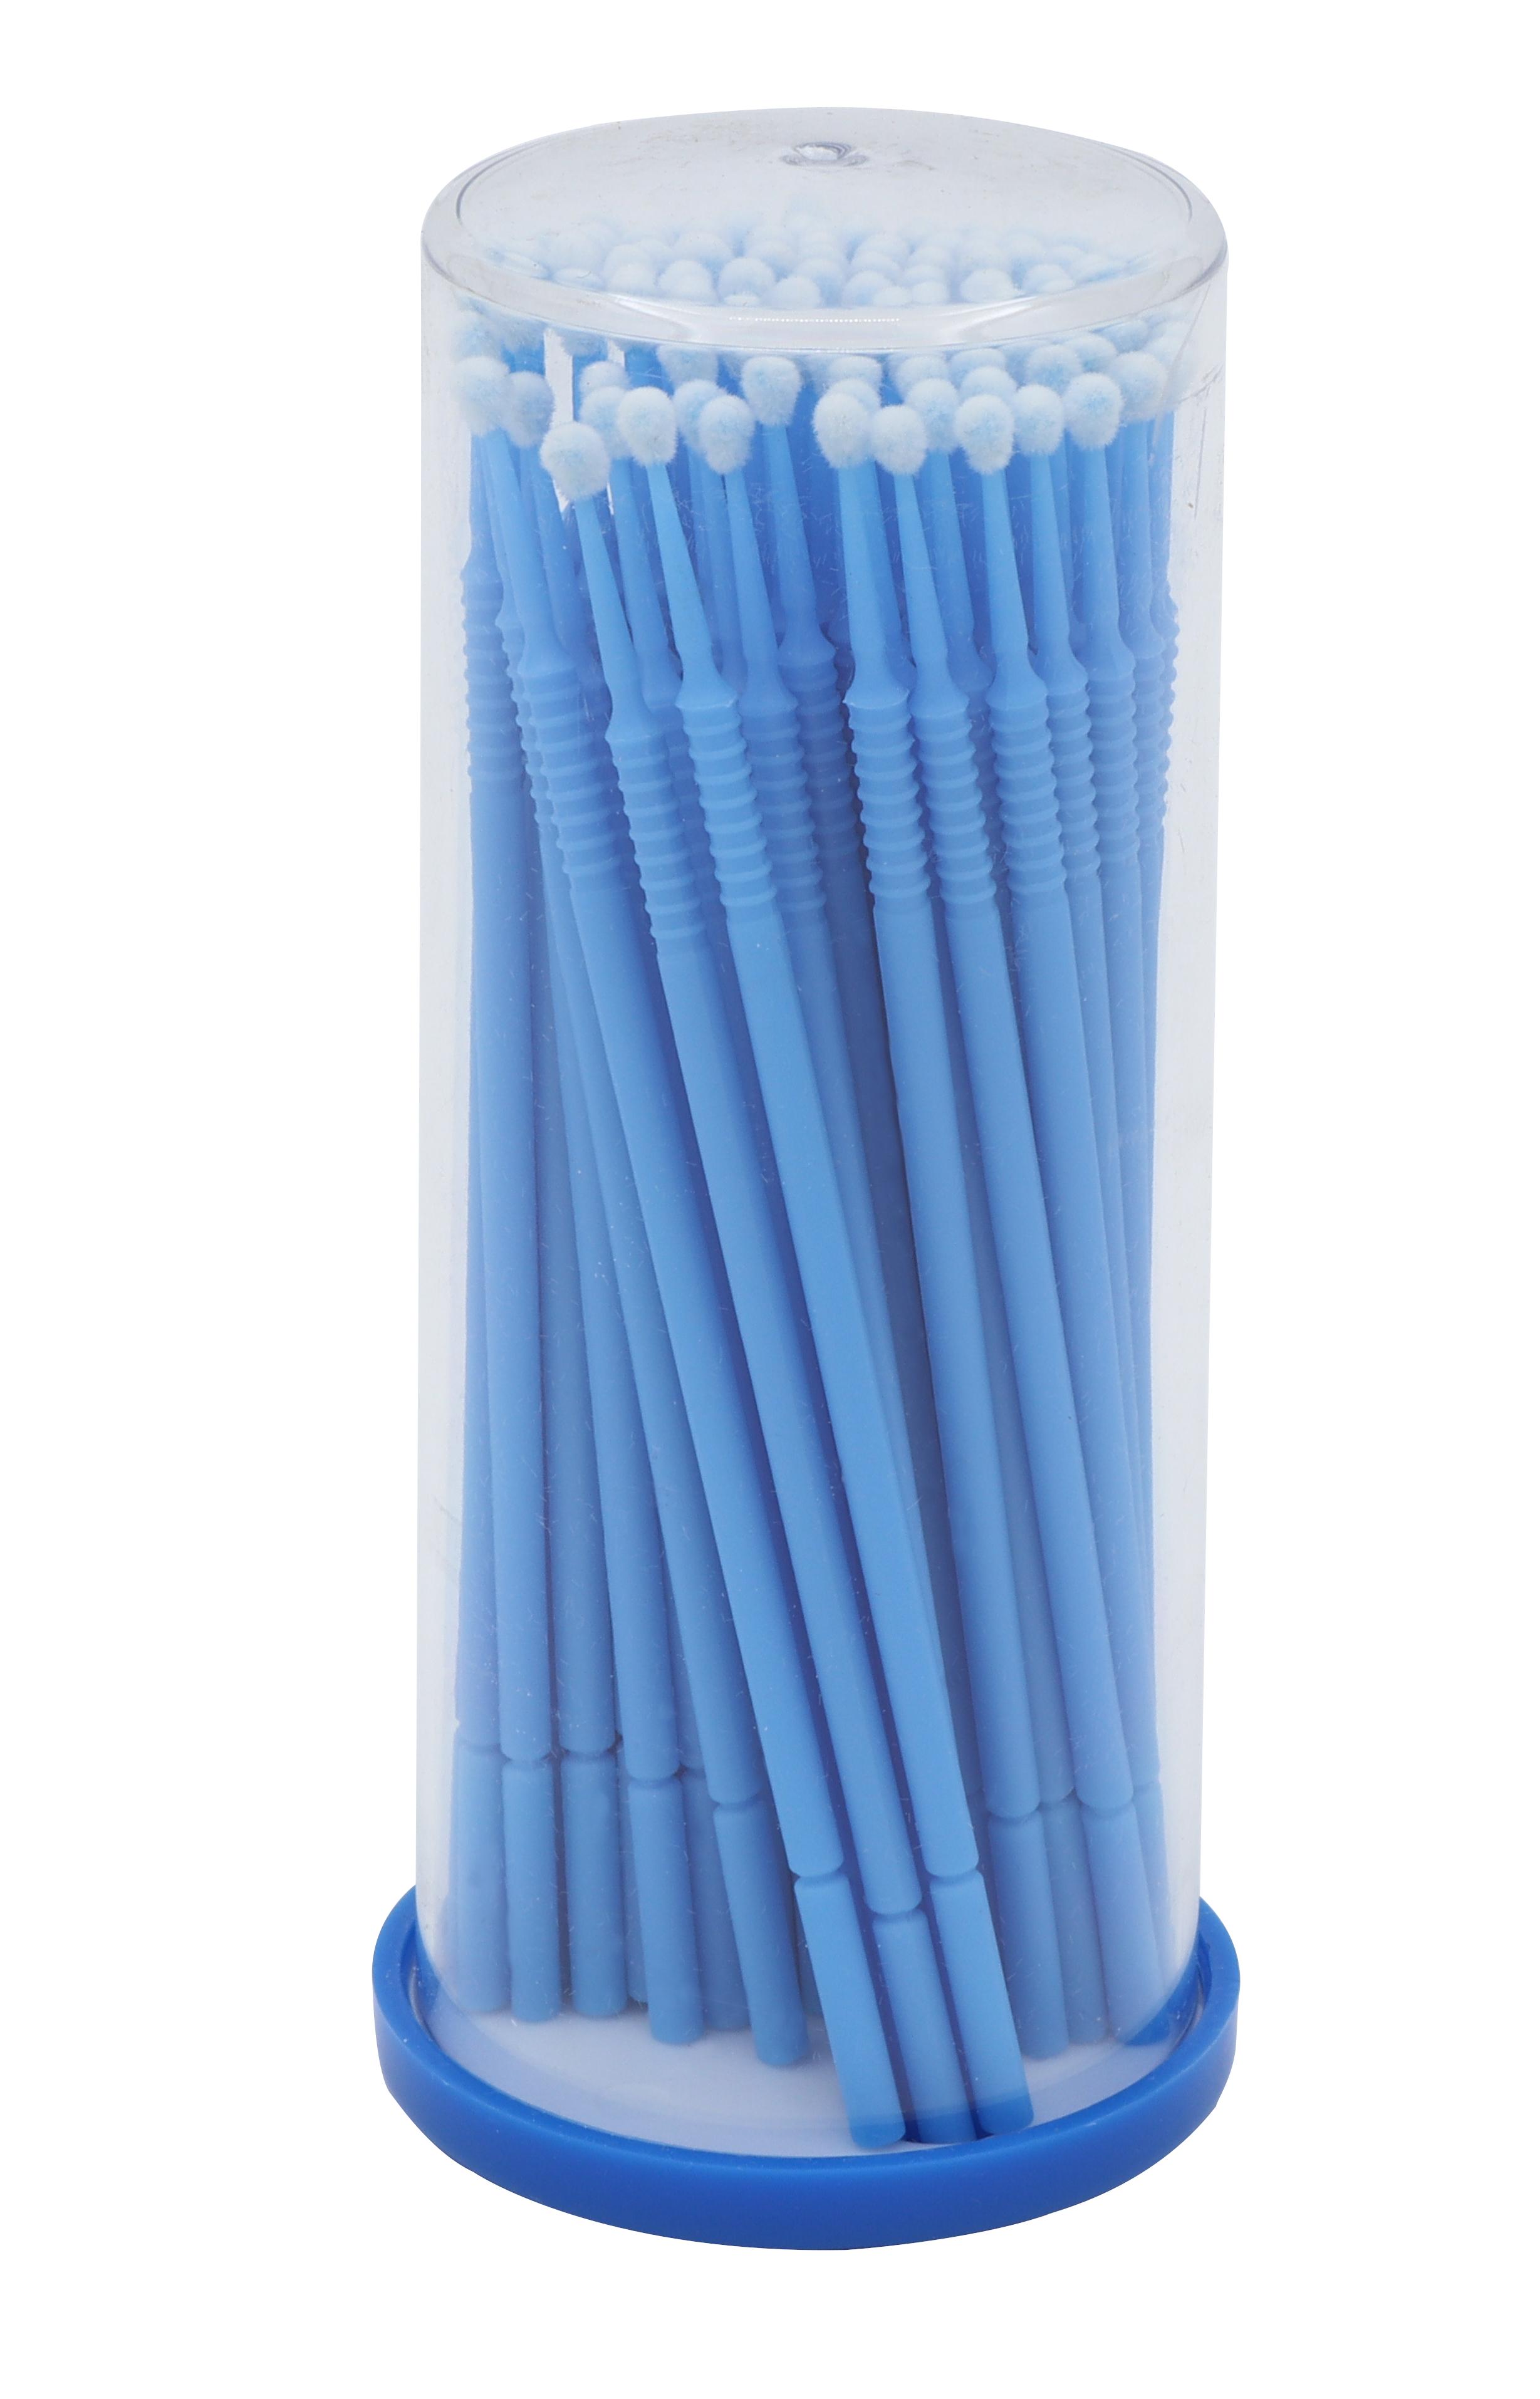 Micropinsel / Lacktupfer 100 Stück blau 2,0mm | Pinsel tupfen ausbessern Autolack